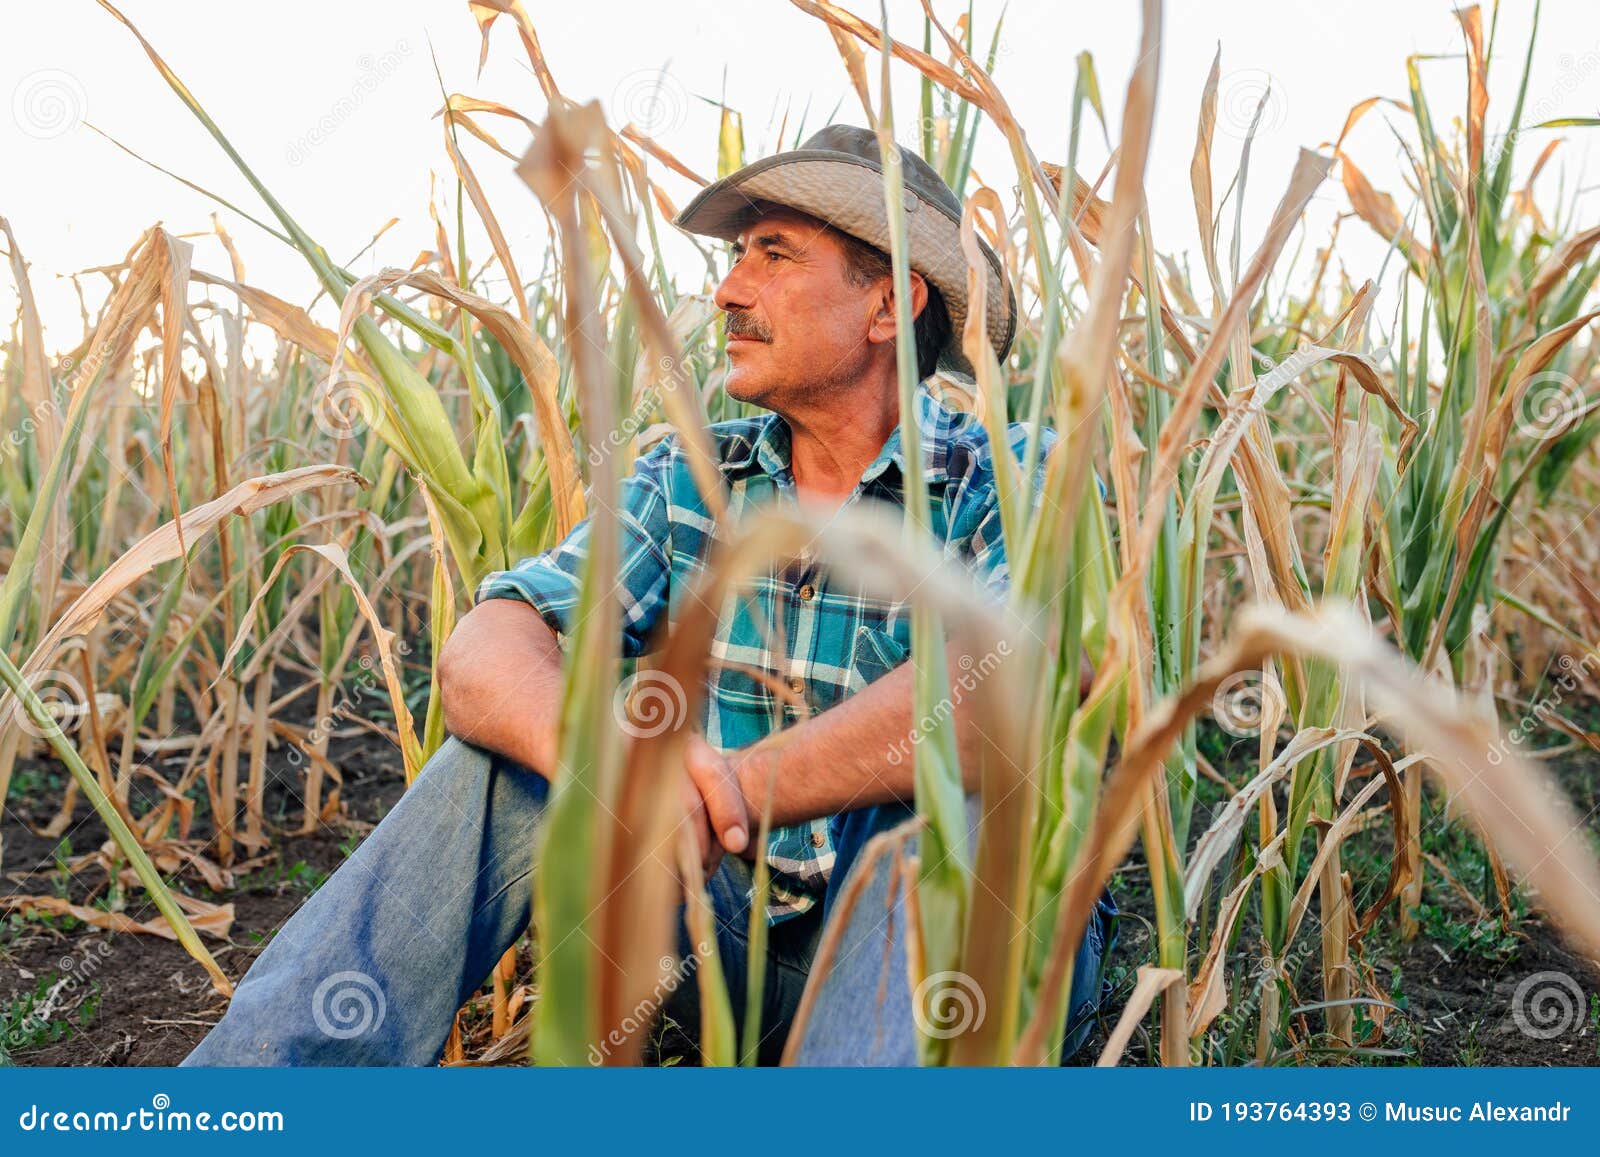 desperate senior agricultor standing in drought-damaged corn crop.